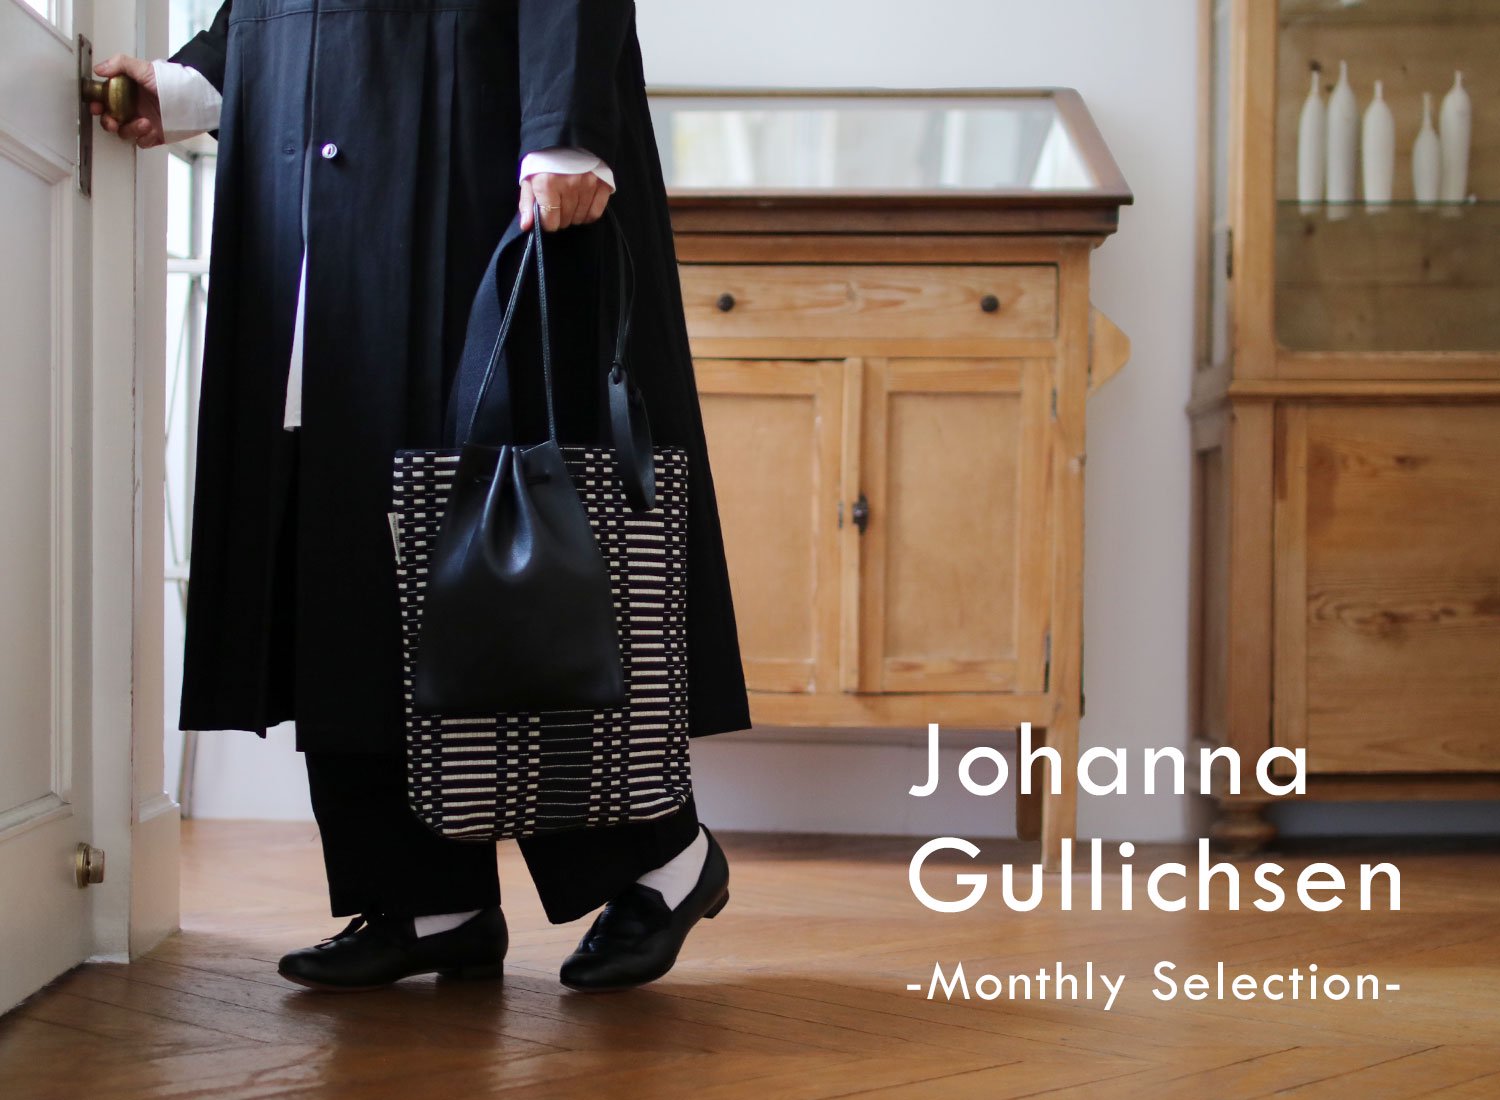 Johanna Gullichsen - Monthly Selection - 2/16 UP